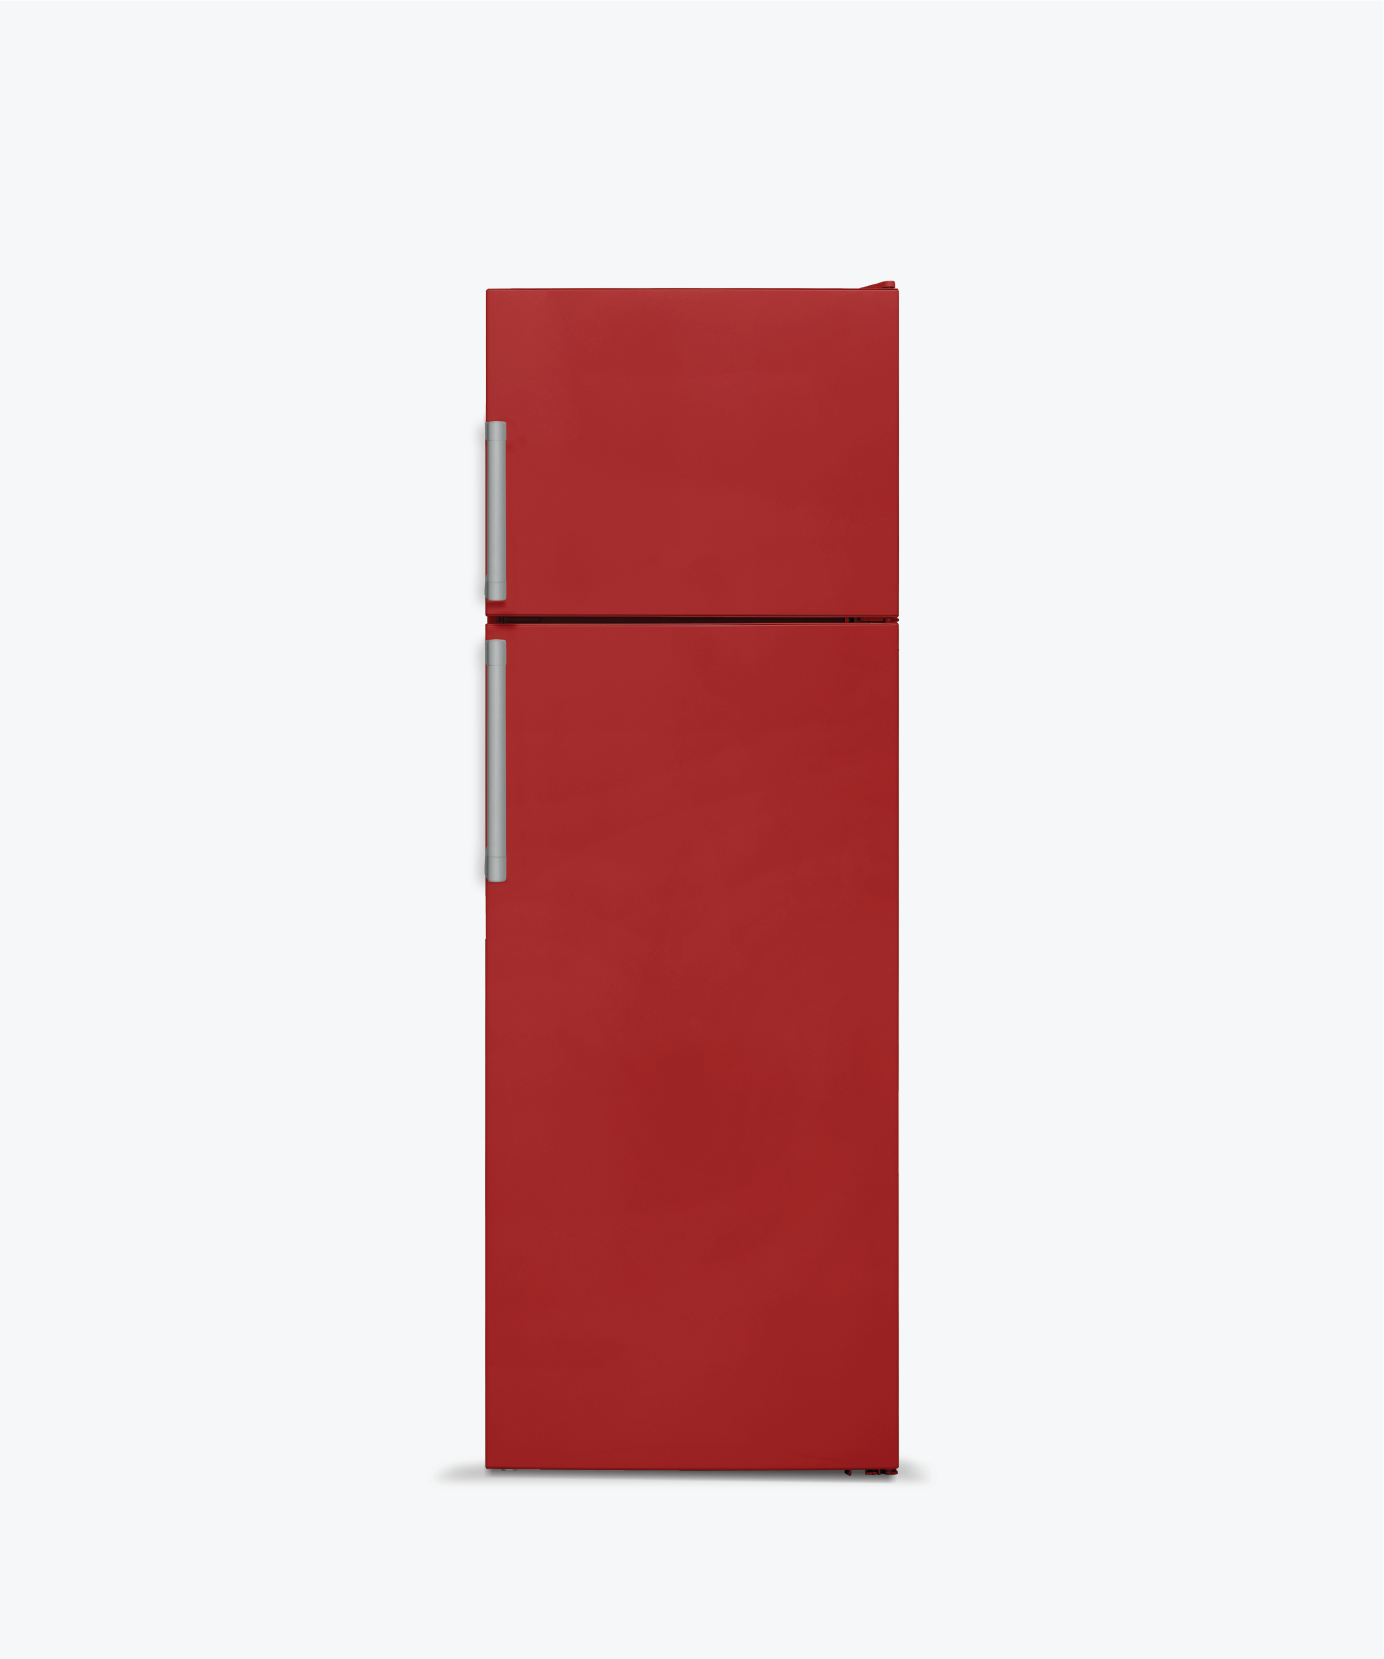 16 Feet Red Refrigerator||Refrigerators 